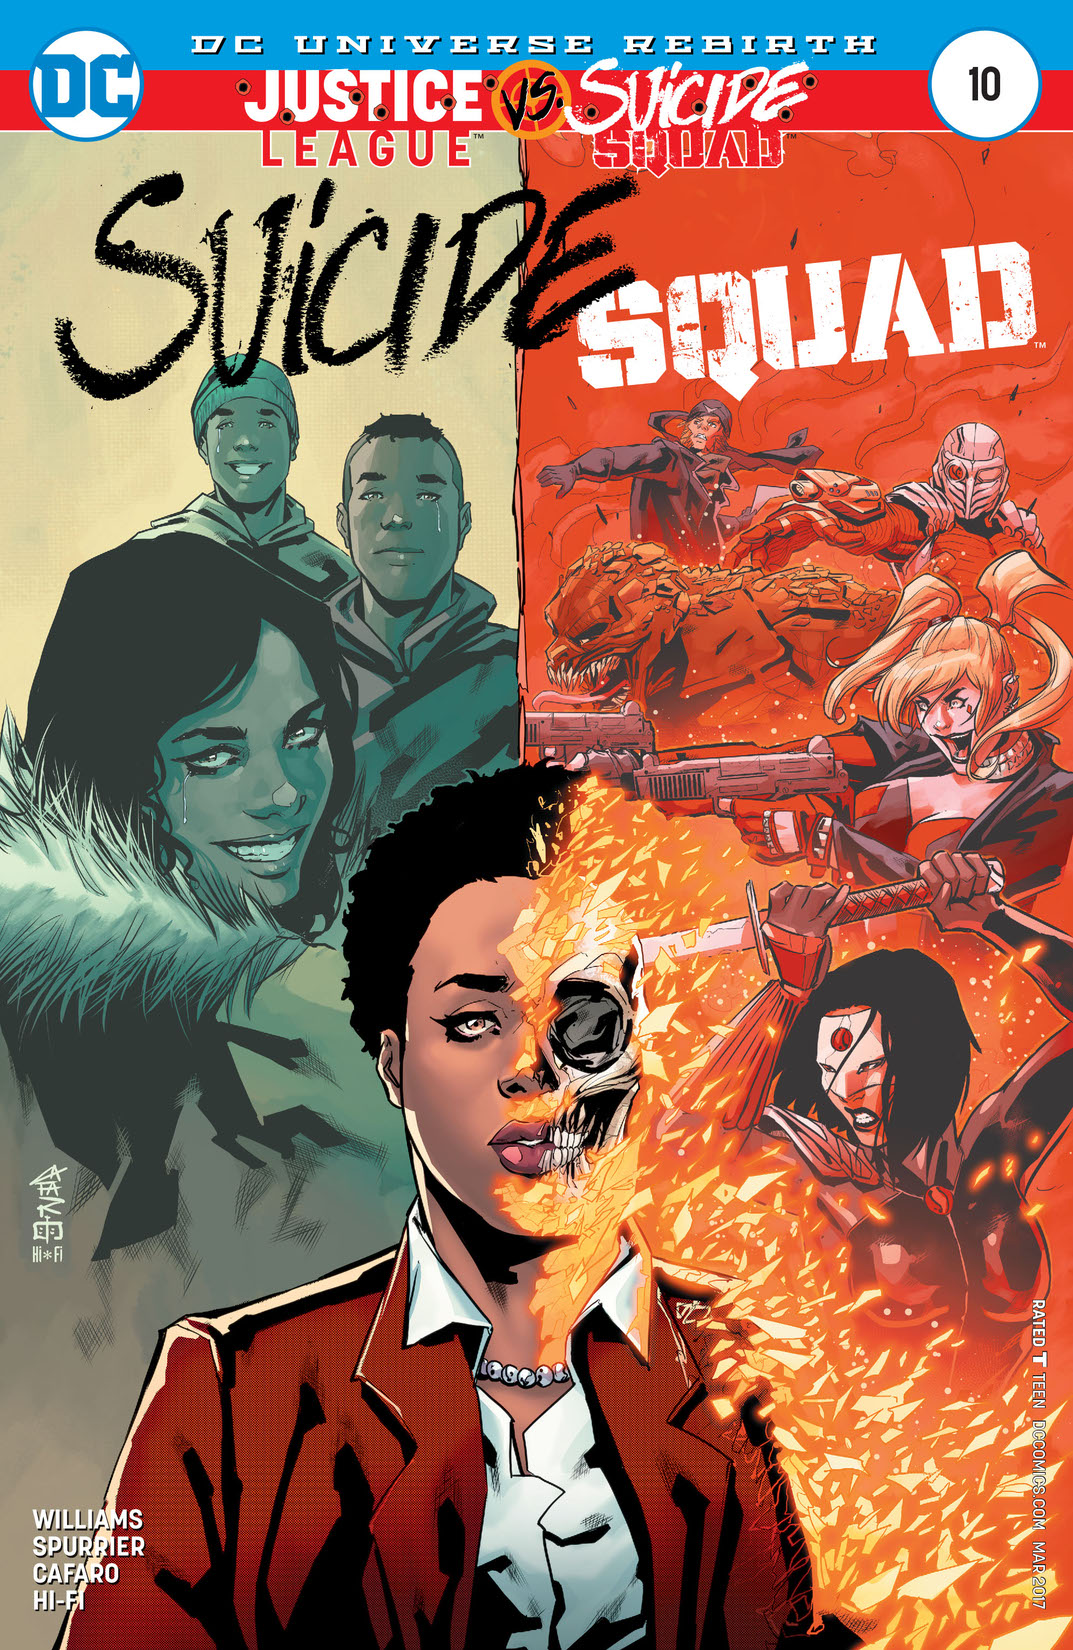 Suicide Squad (2016-) #10 preview images